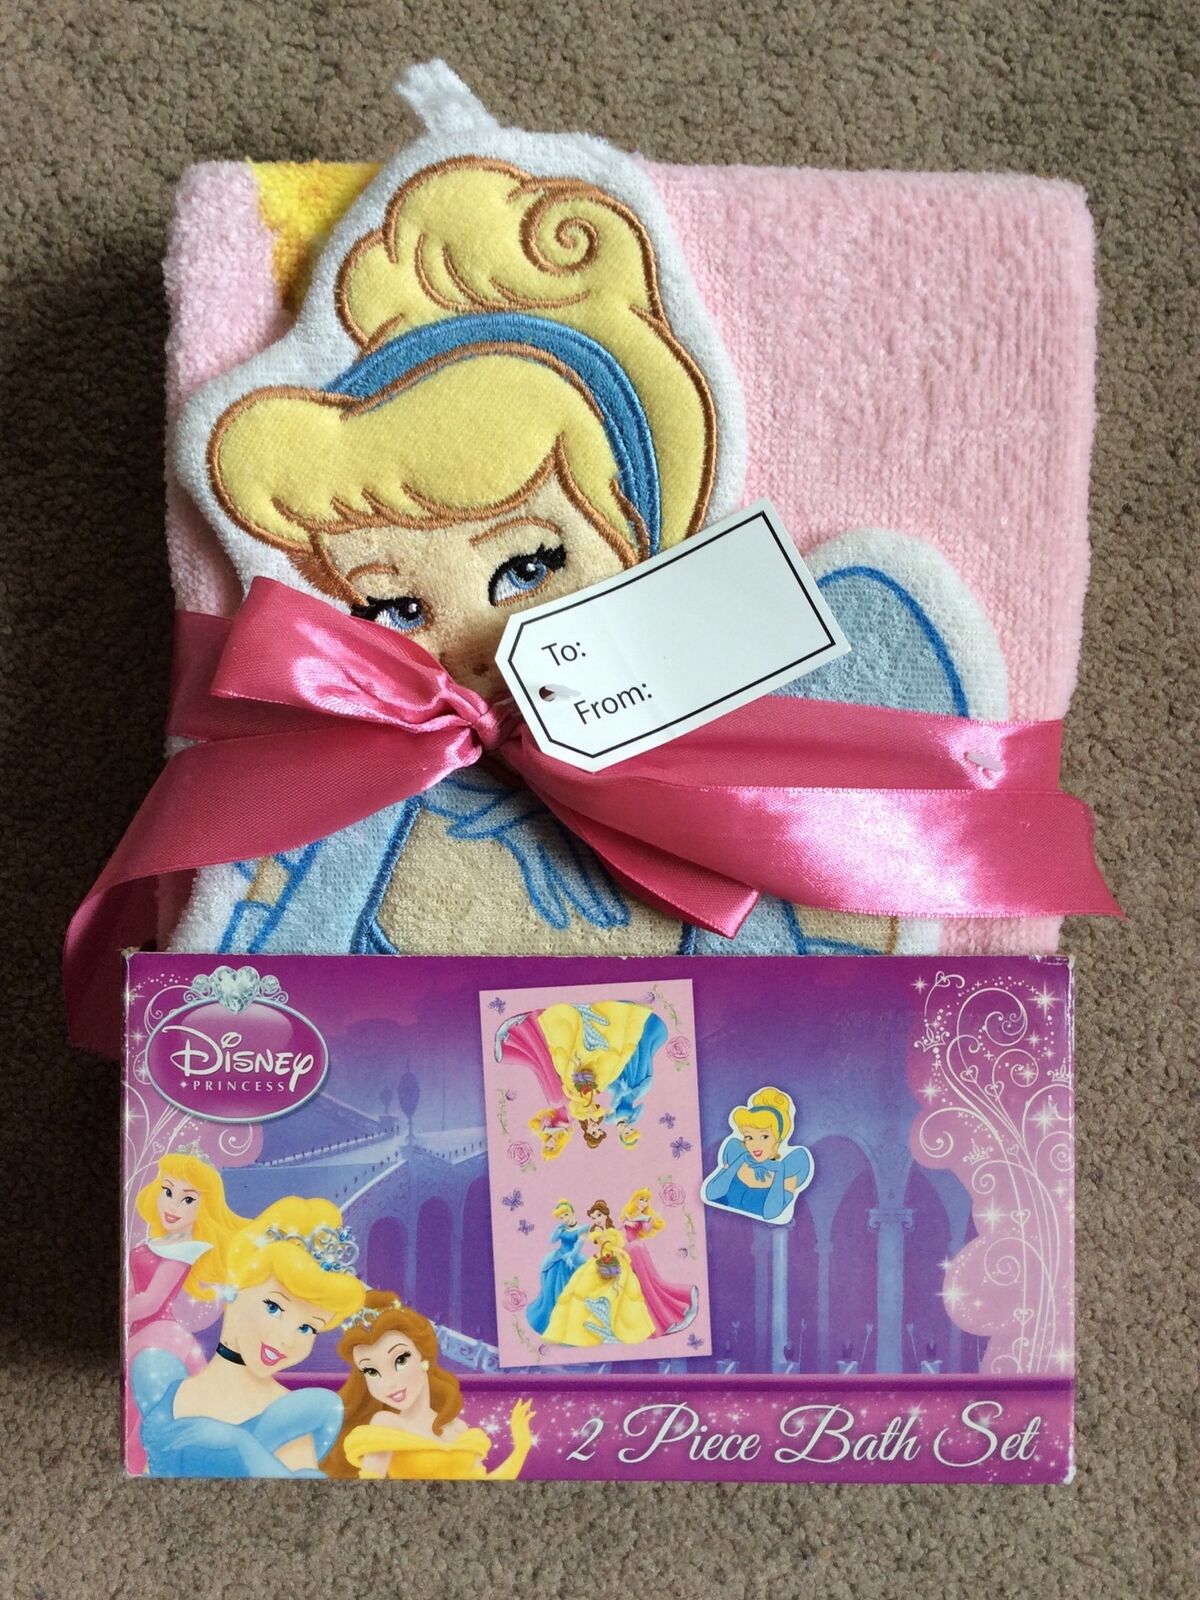 New Disney Princess 2 Piece Bath Set Pink Belle Bath Towel Cinderella Wash Mitt